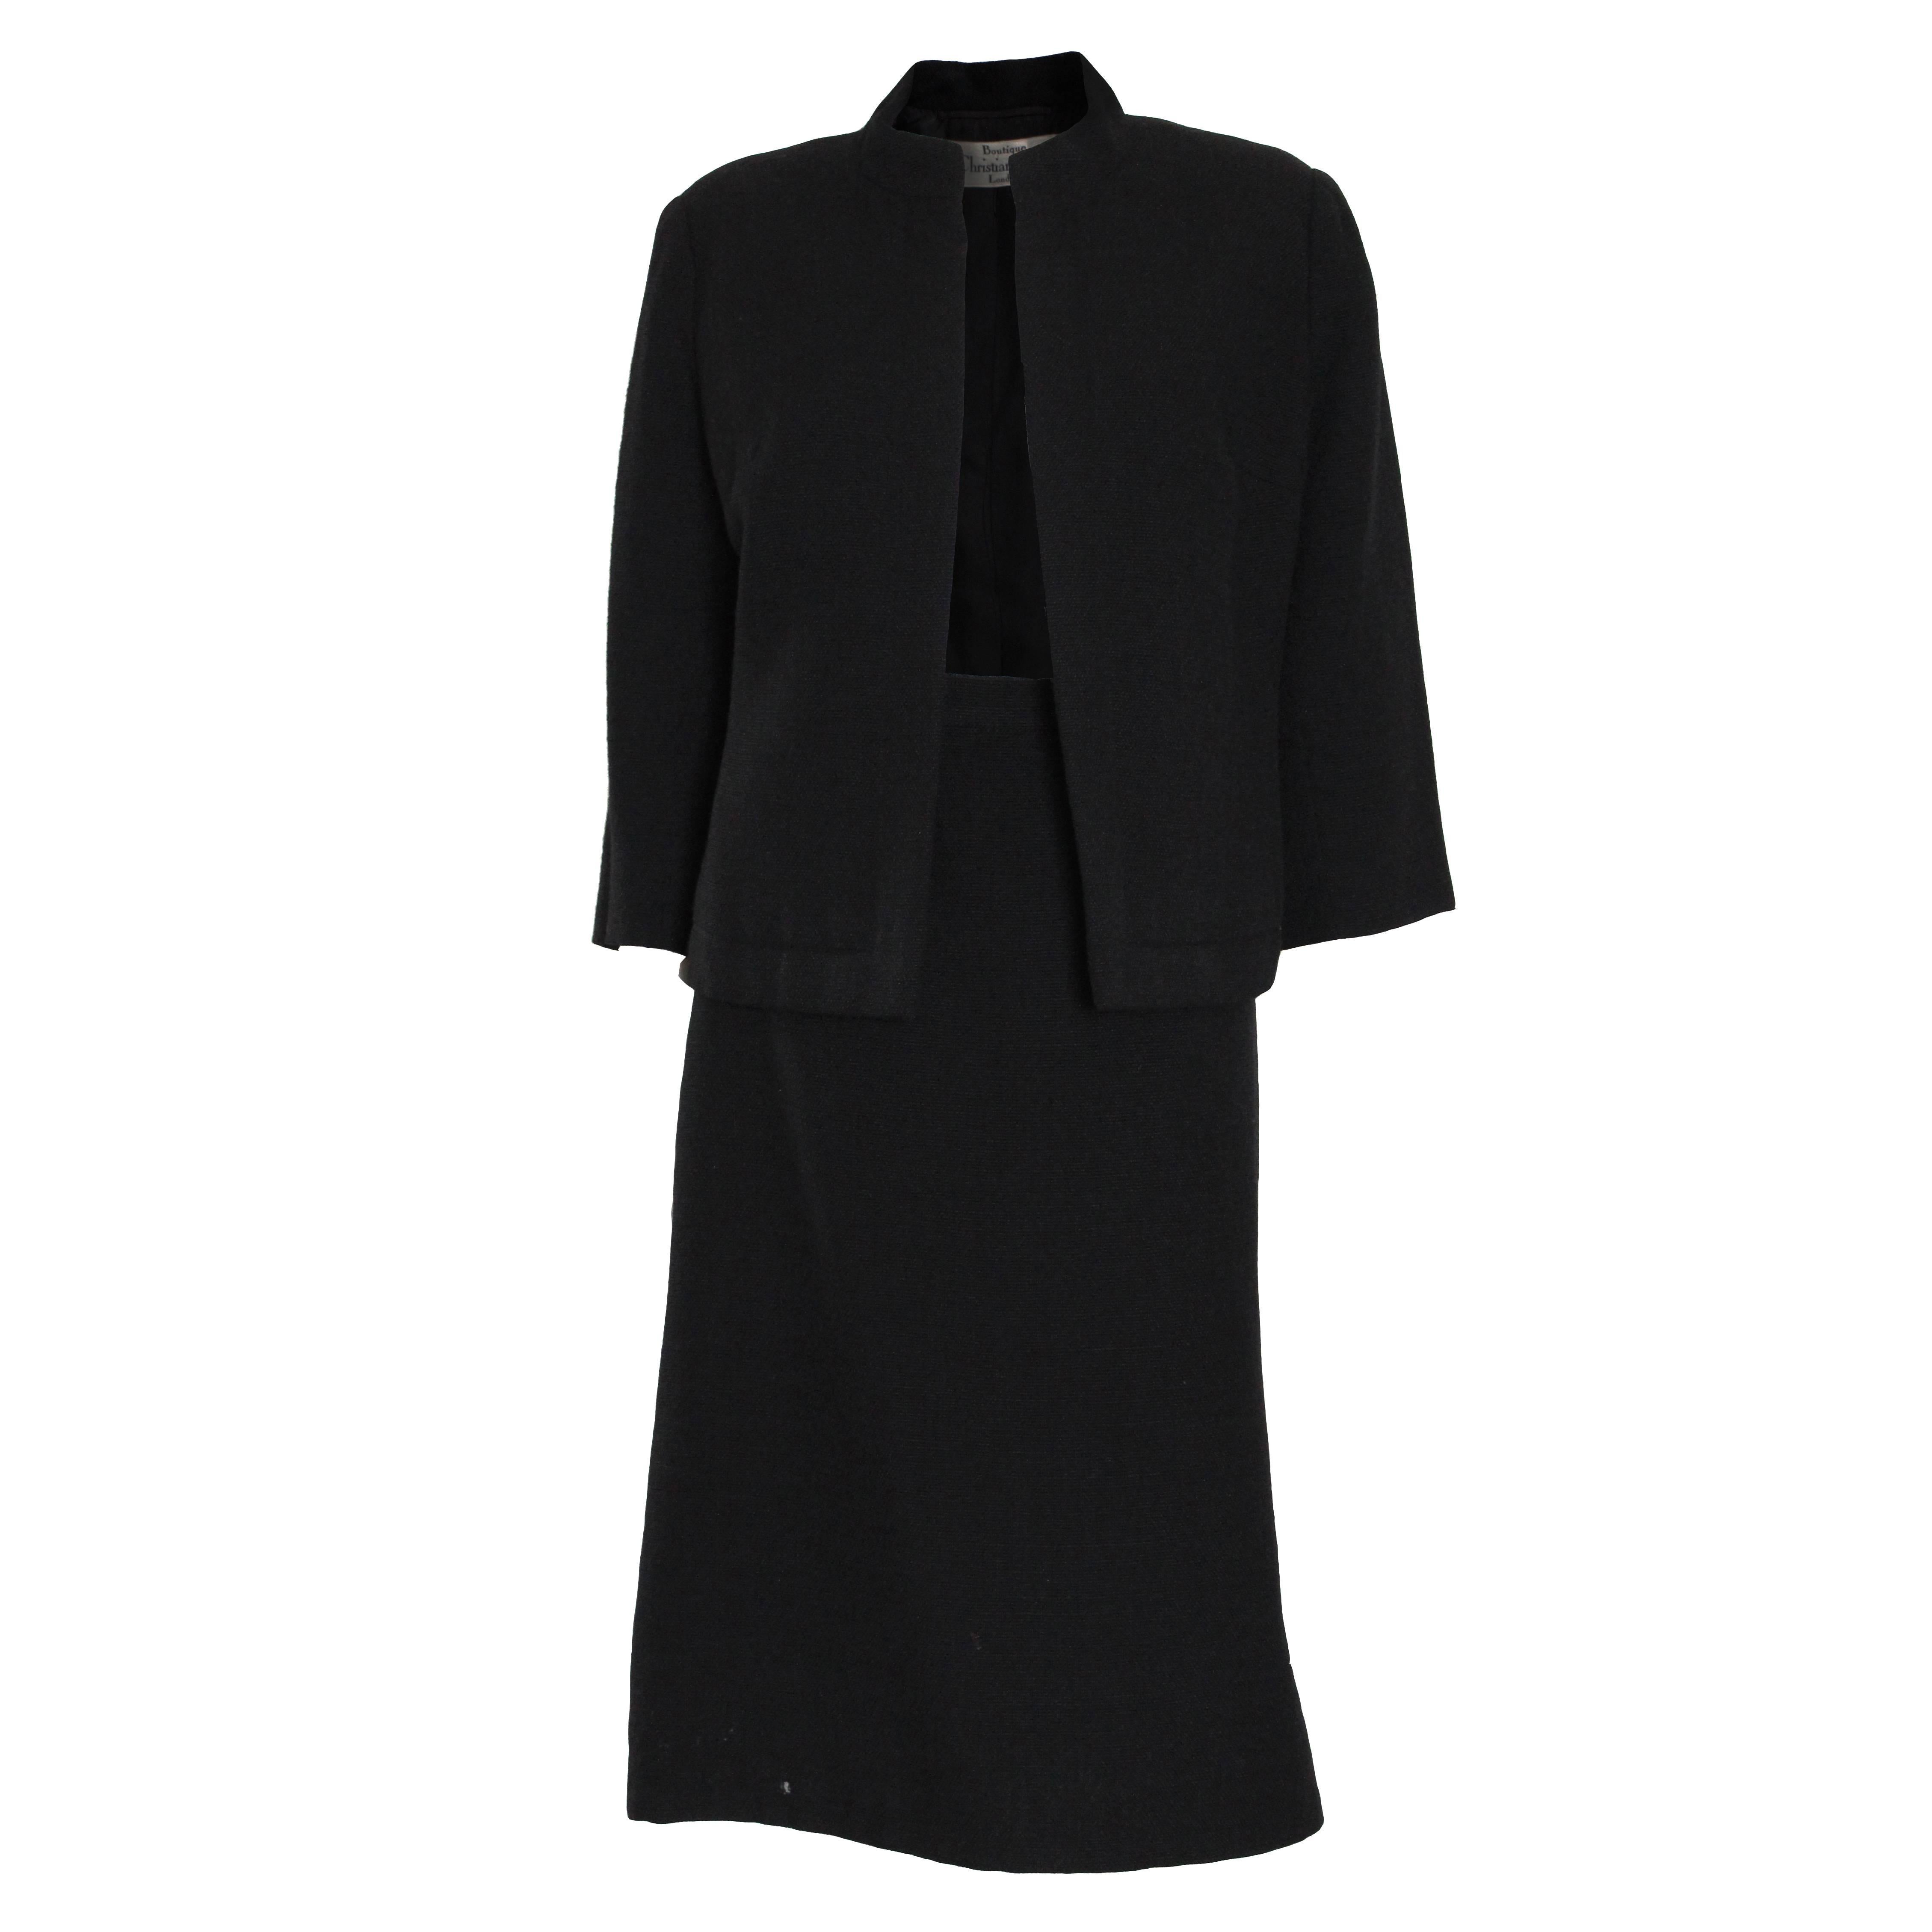 Christian Dior Black Skirt Suit